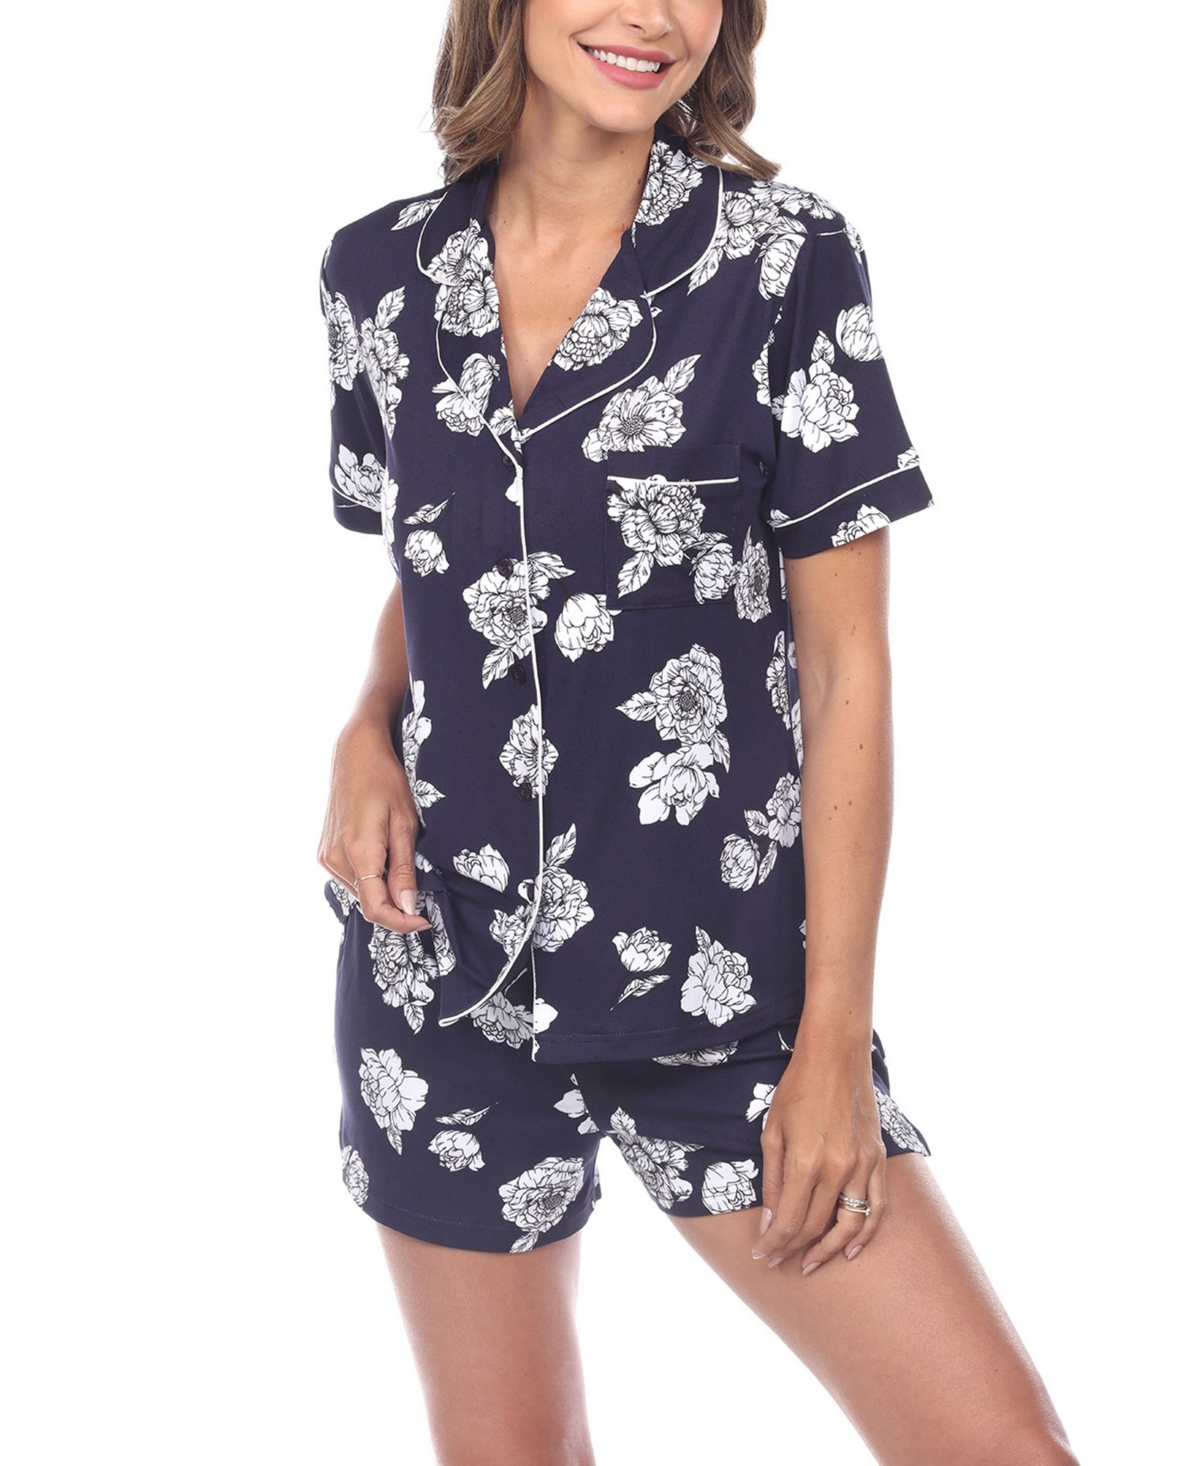 Women's Short Sleeve Floral Pajama Set, 2-Piece - Gray